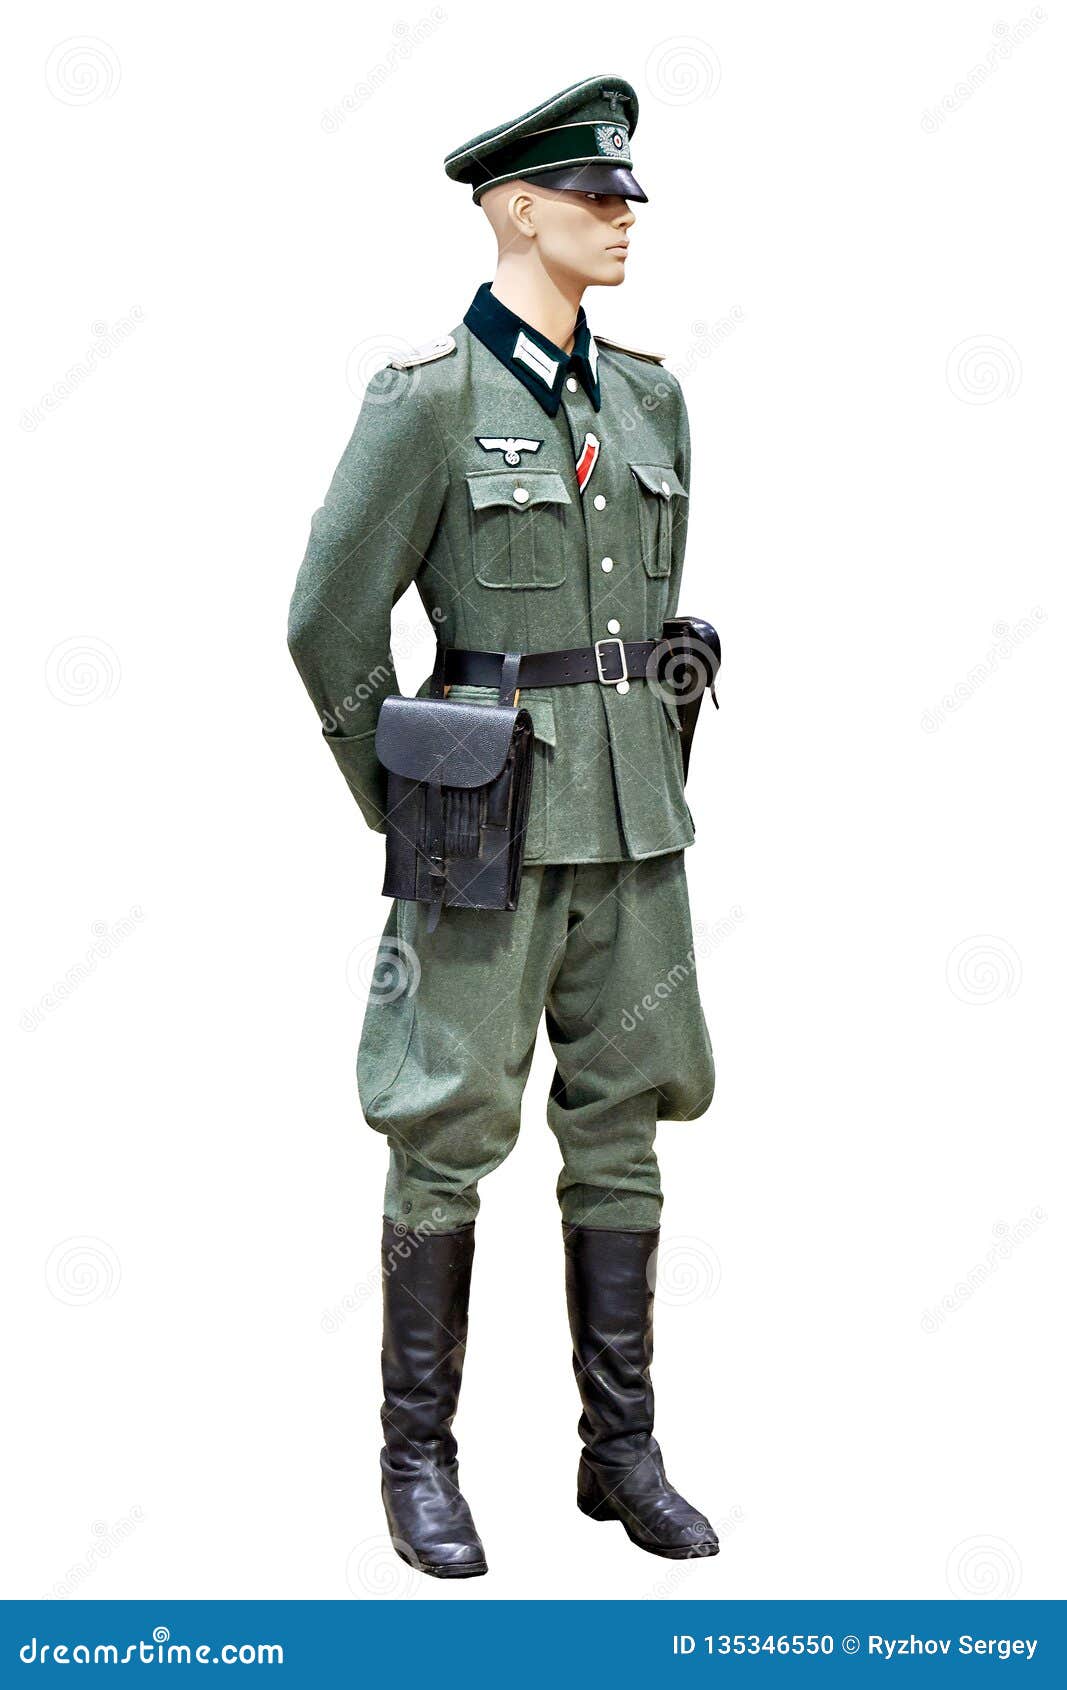 Total 56+ imagen uniformes alemanes de la segunda guerra mundial